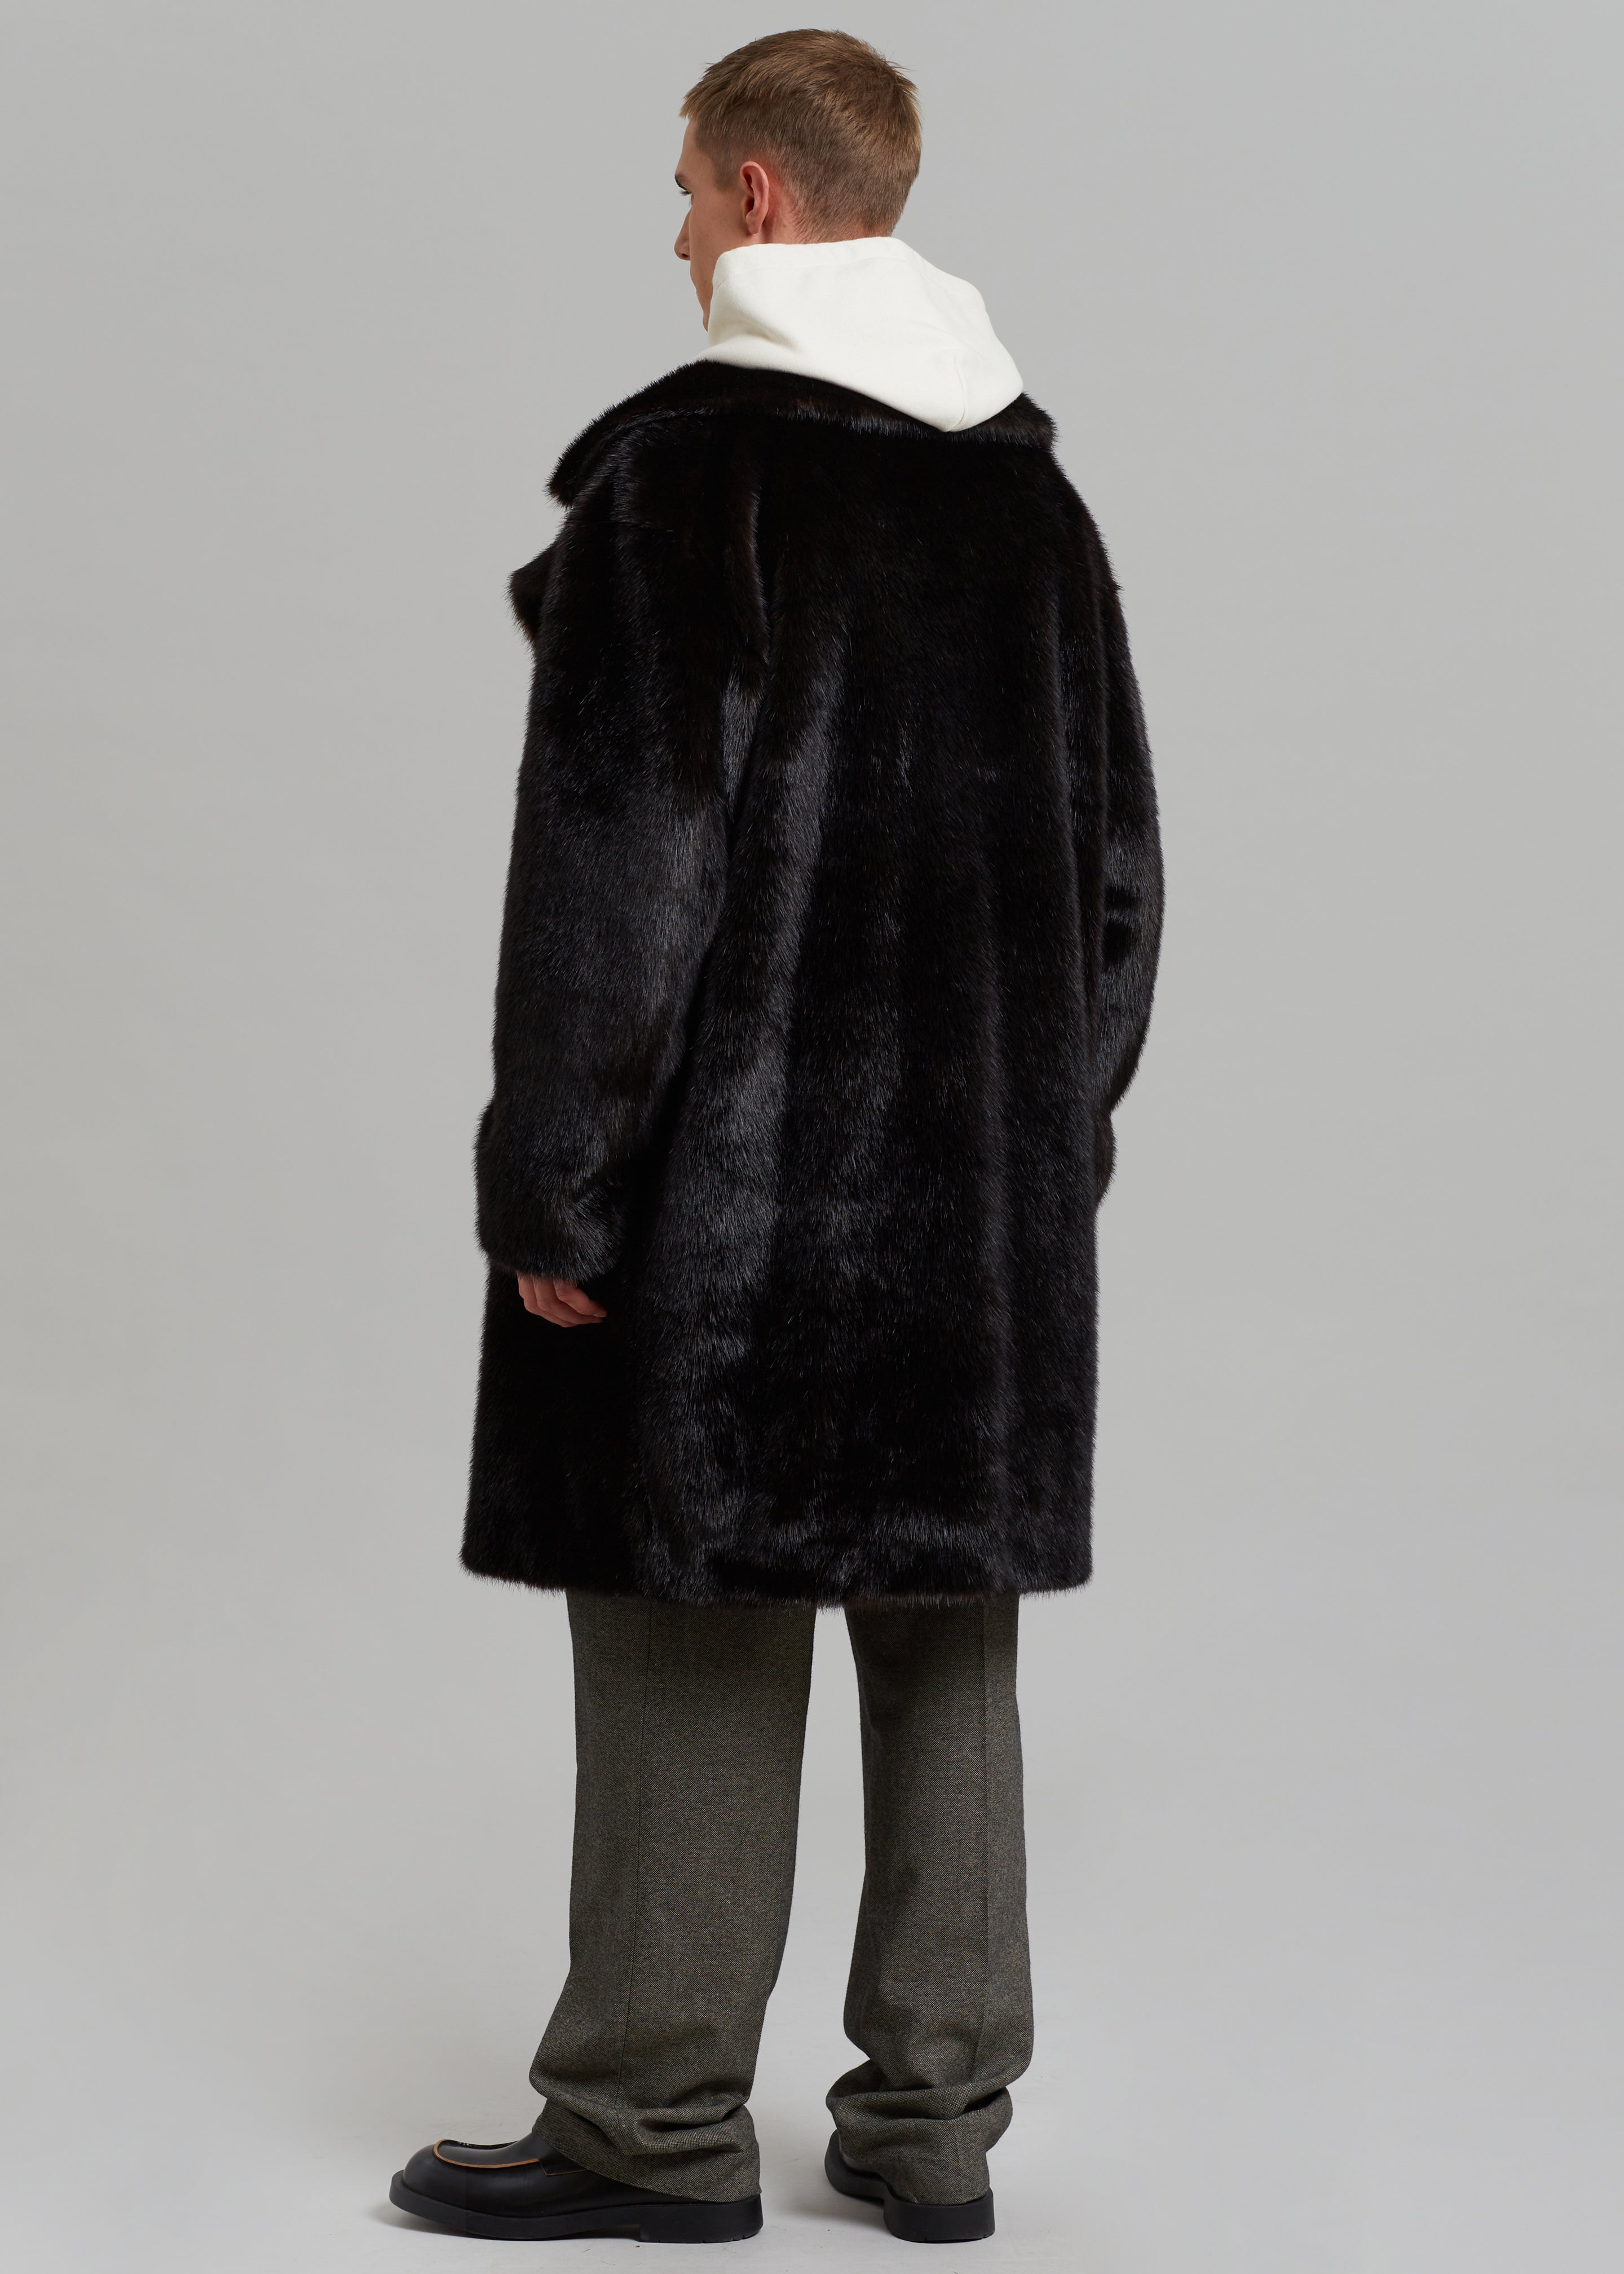 Oversized Grey Faux Fur Coat Men - Fur Coat with Hood